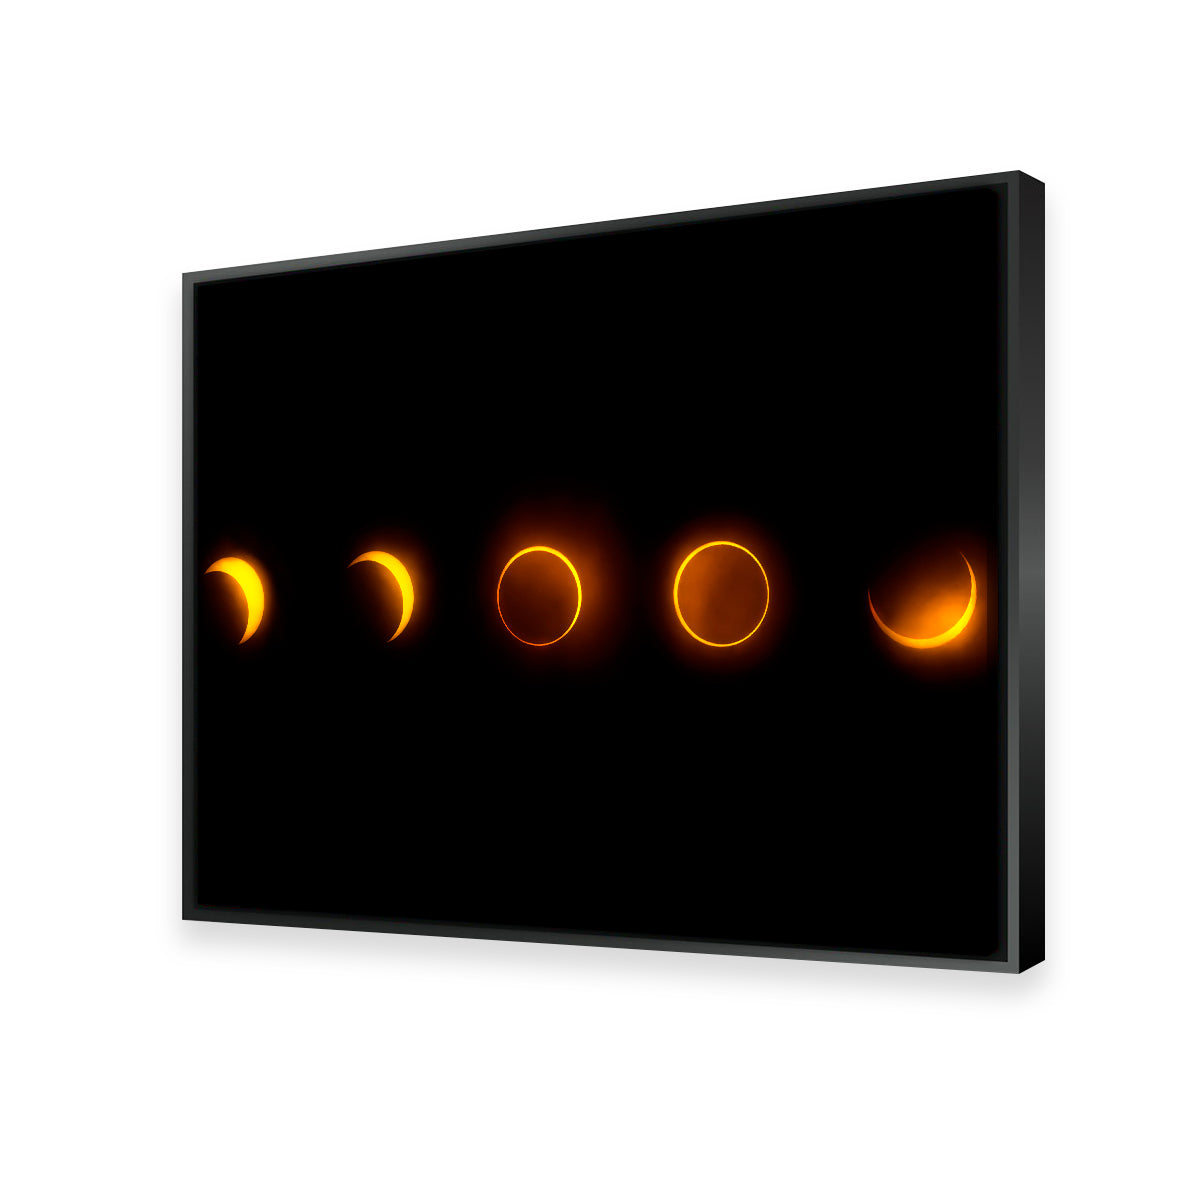 Annular Solar Eclipse - Brazil 2023